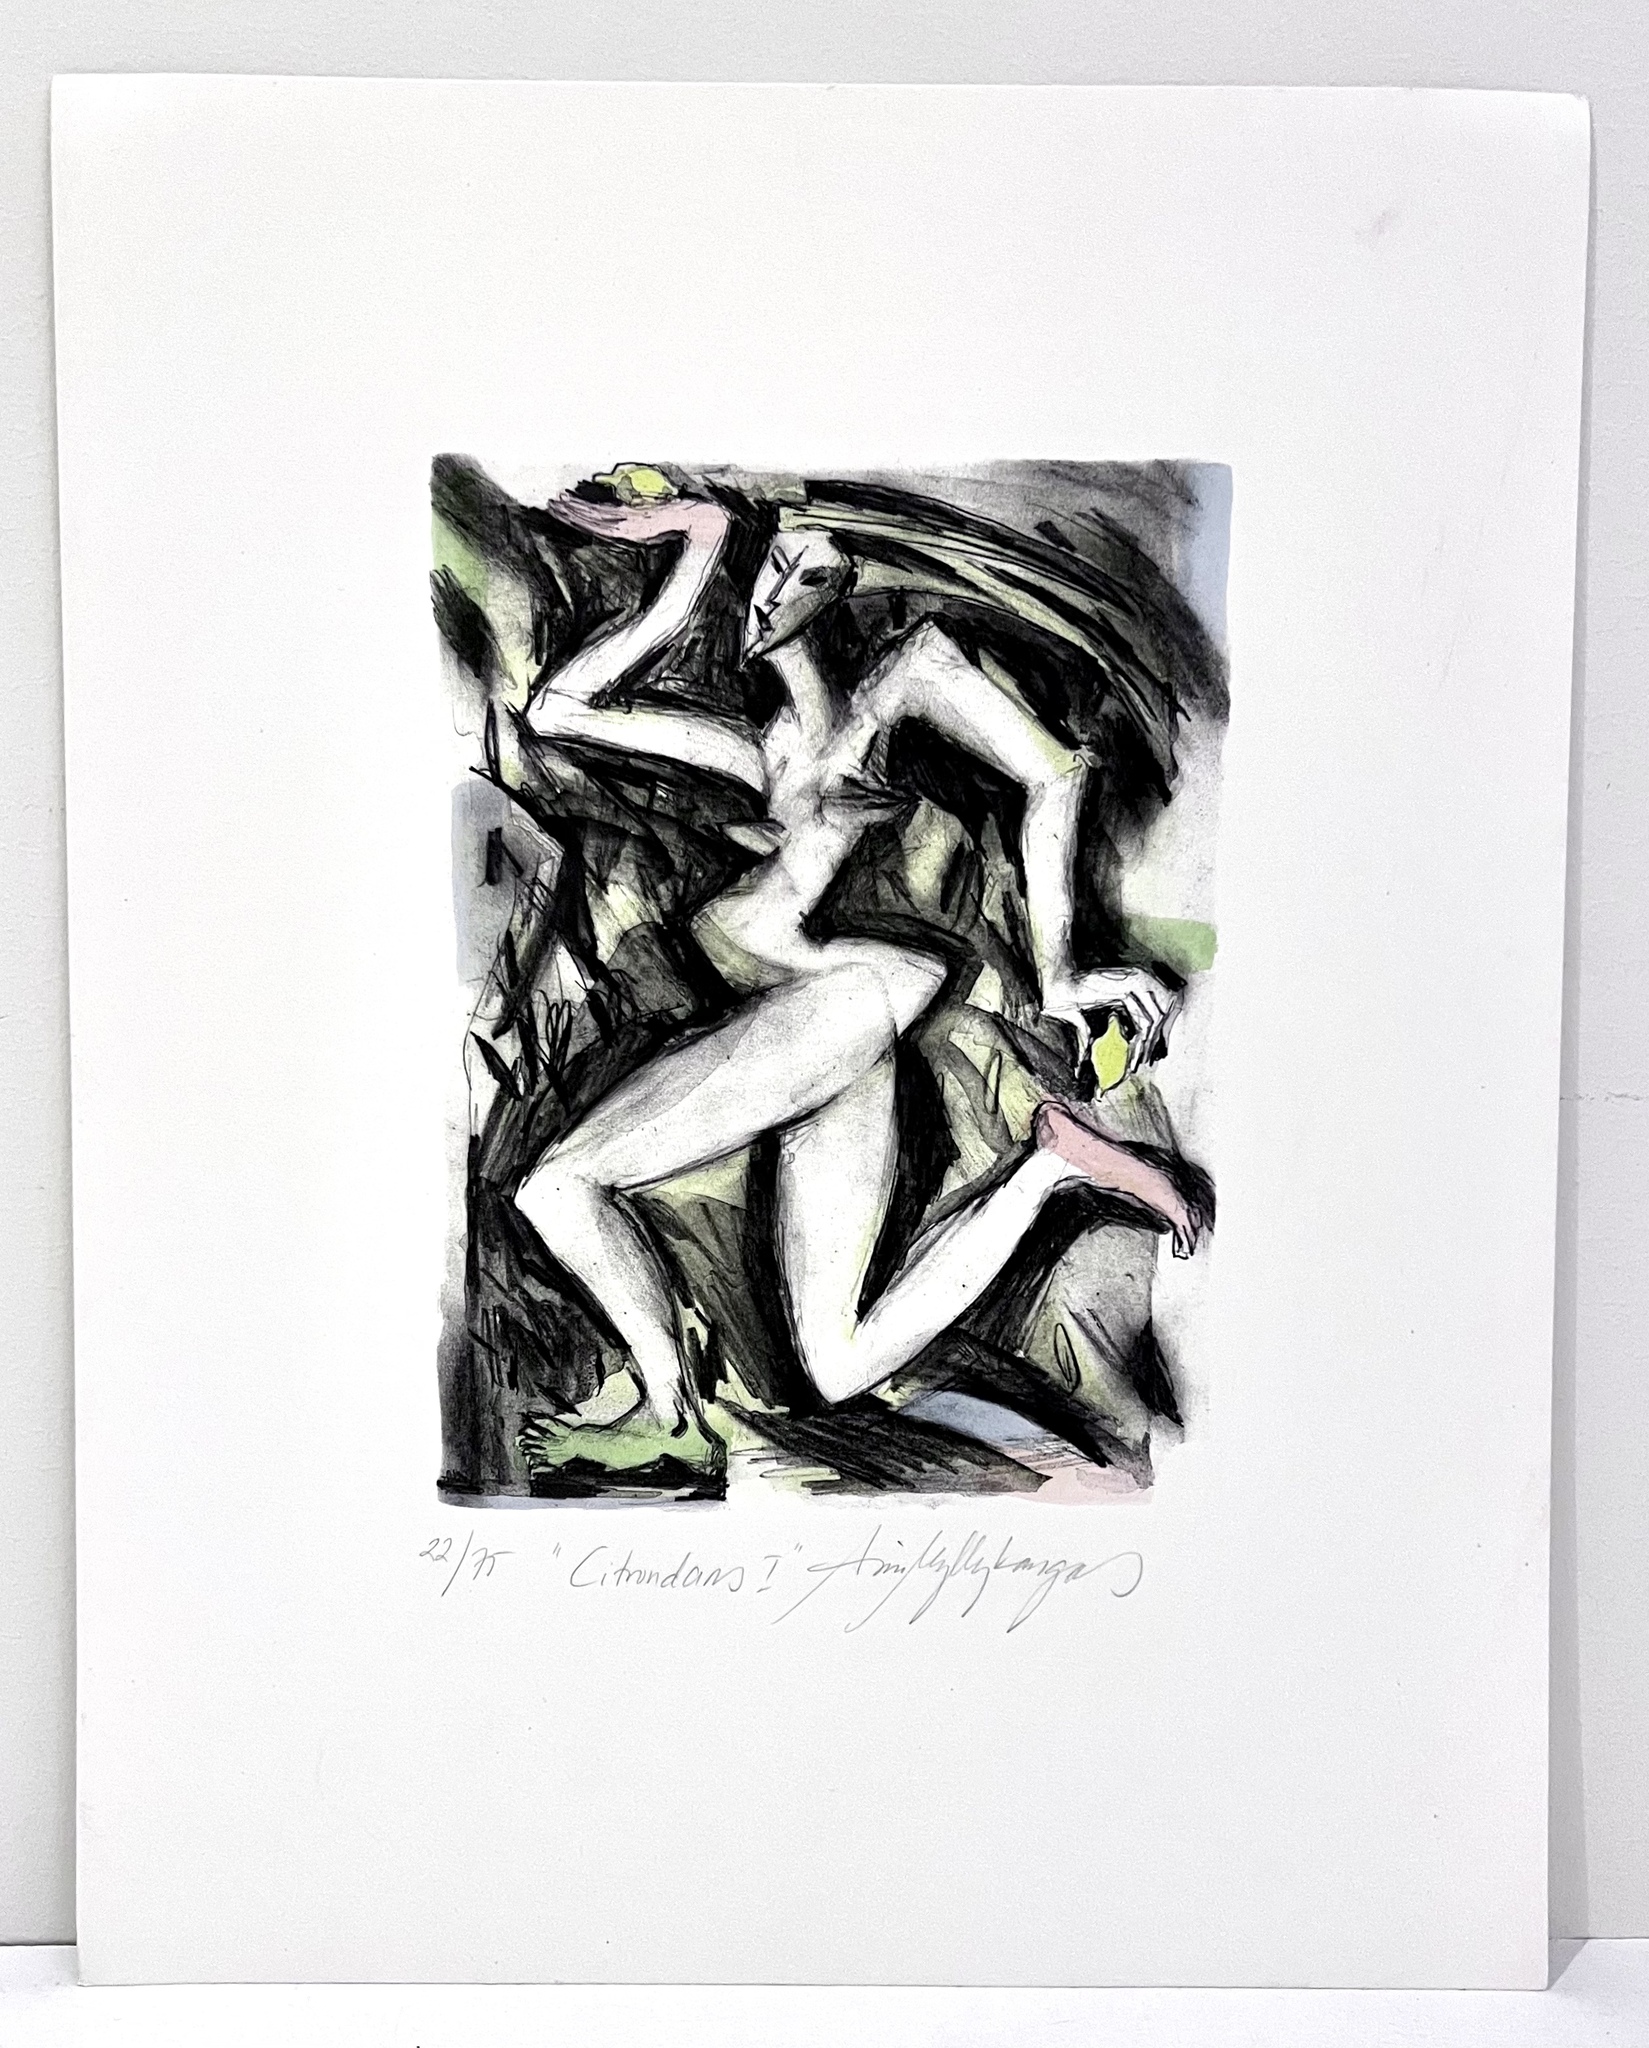 "Citrondans I" Etsning av Aino Myllykangas. 31x42 cm